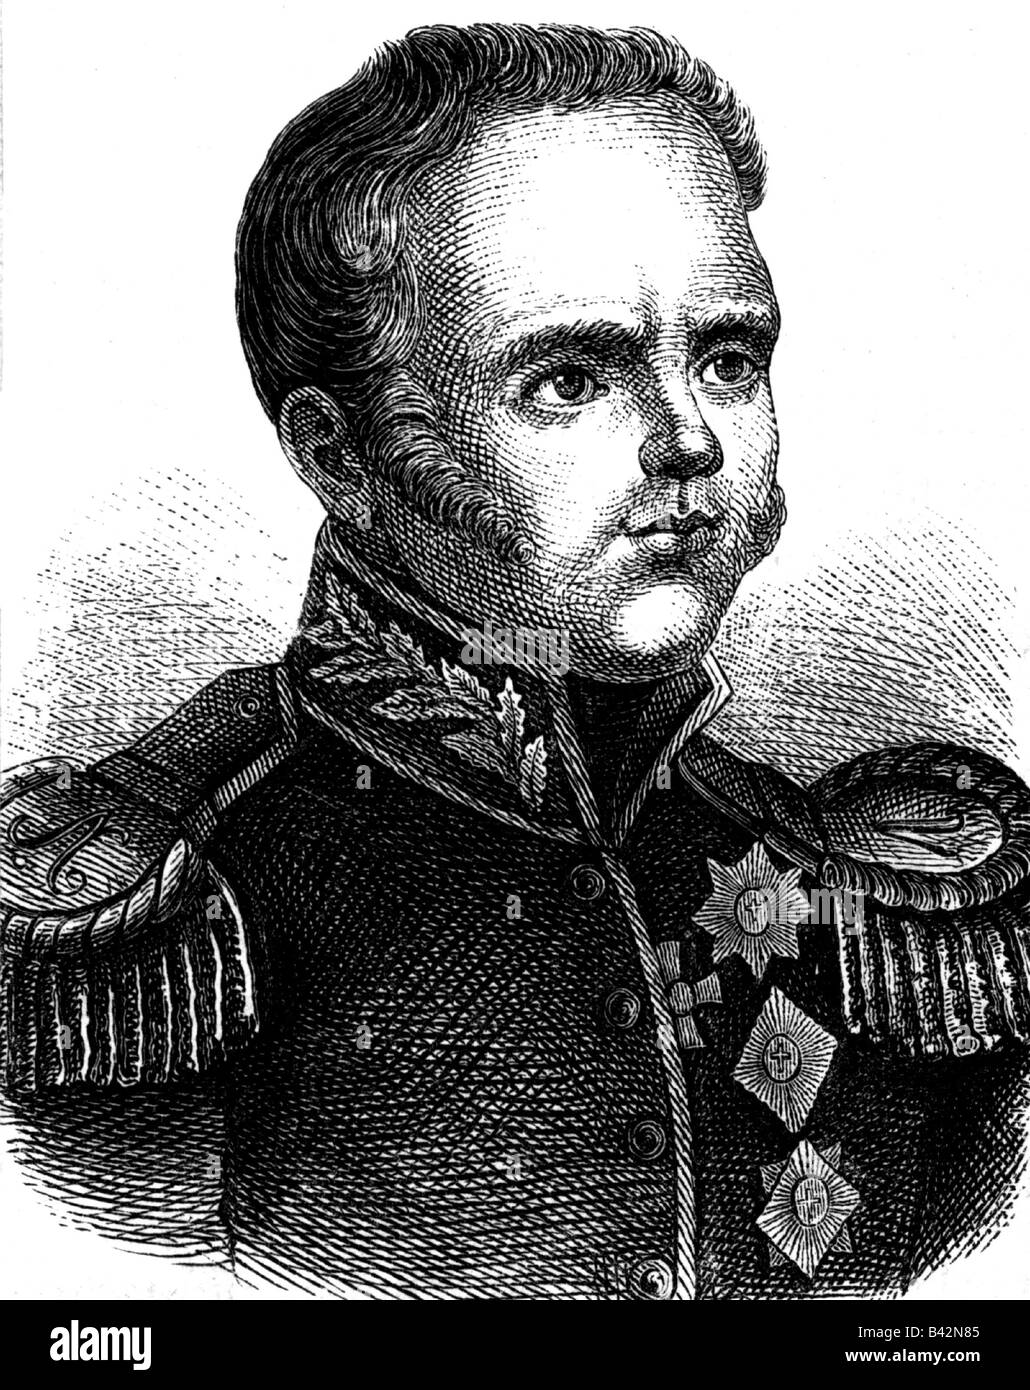 Constantine Pavlovich, 8.5.1779 - 27.6.1831, Grand Duke of Russia,  portrait, engraving, 19th century, Romanov, , Stock Photo